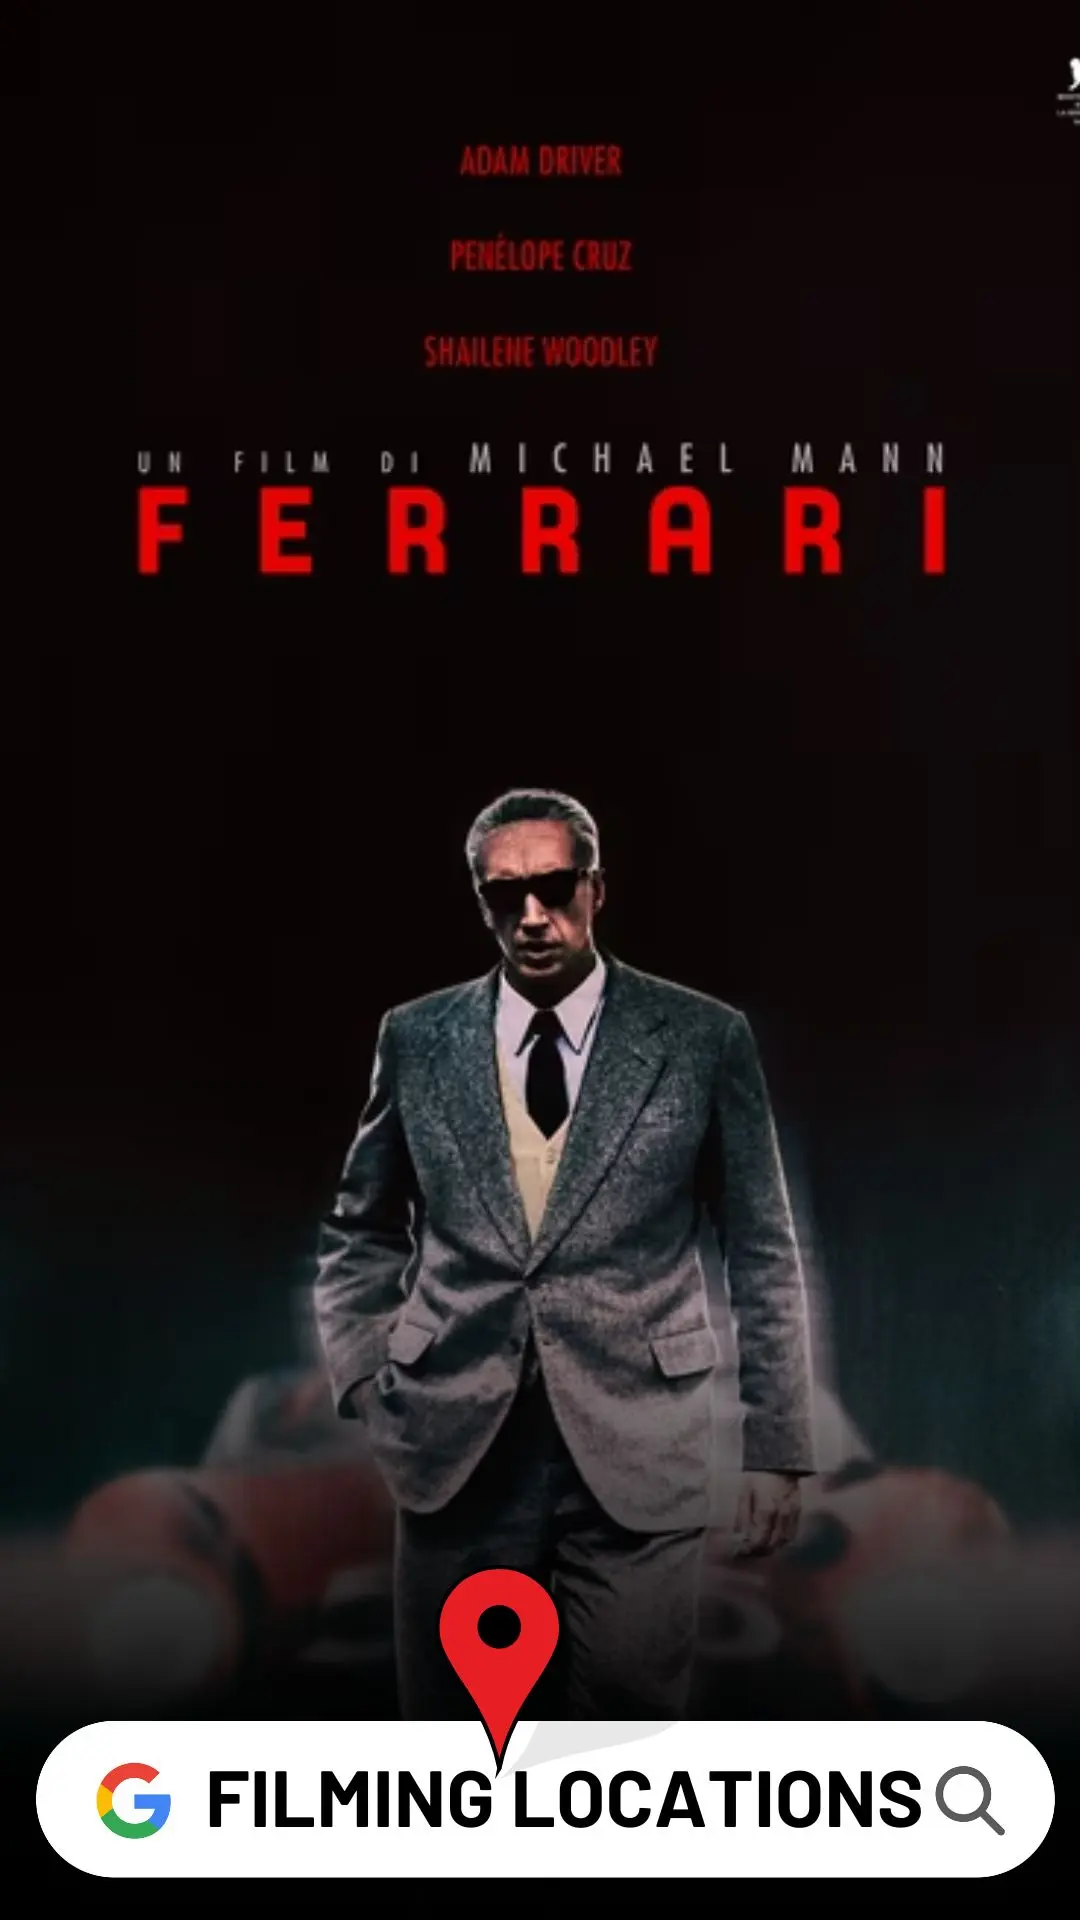 Ferrari Filming Locations